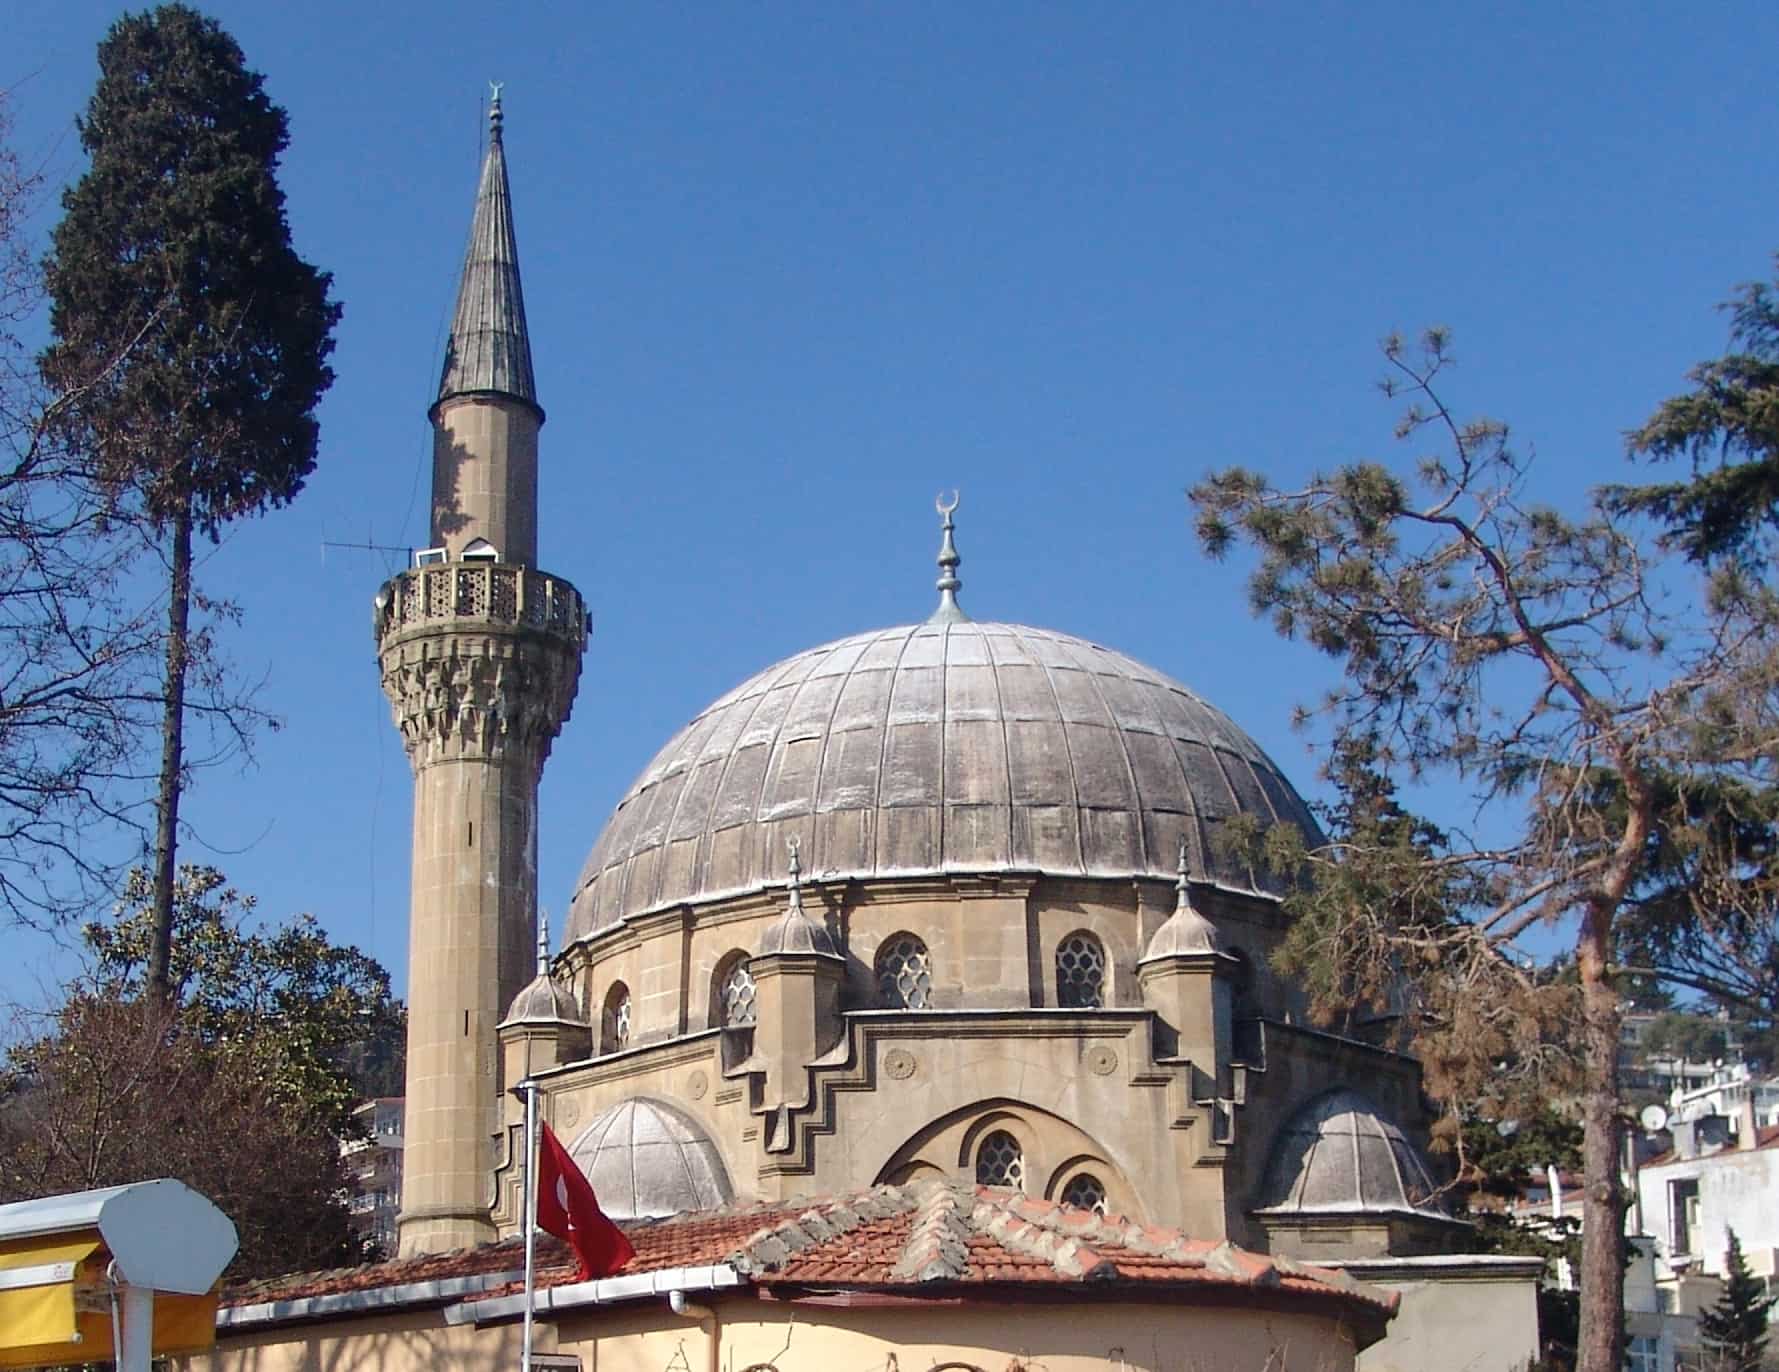 Bebek Mosque in Bebek, Istanbul, Turkey